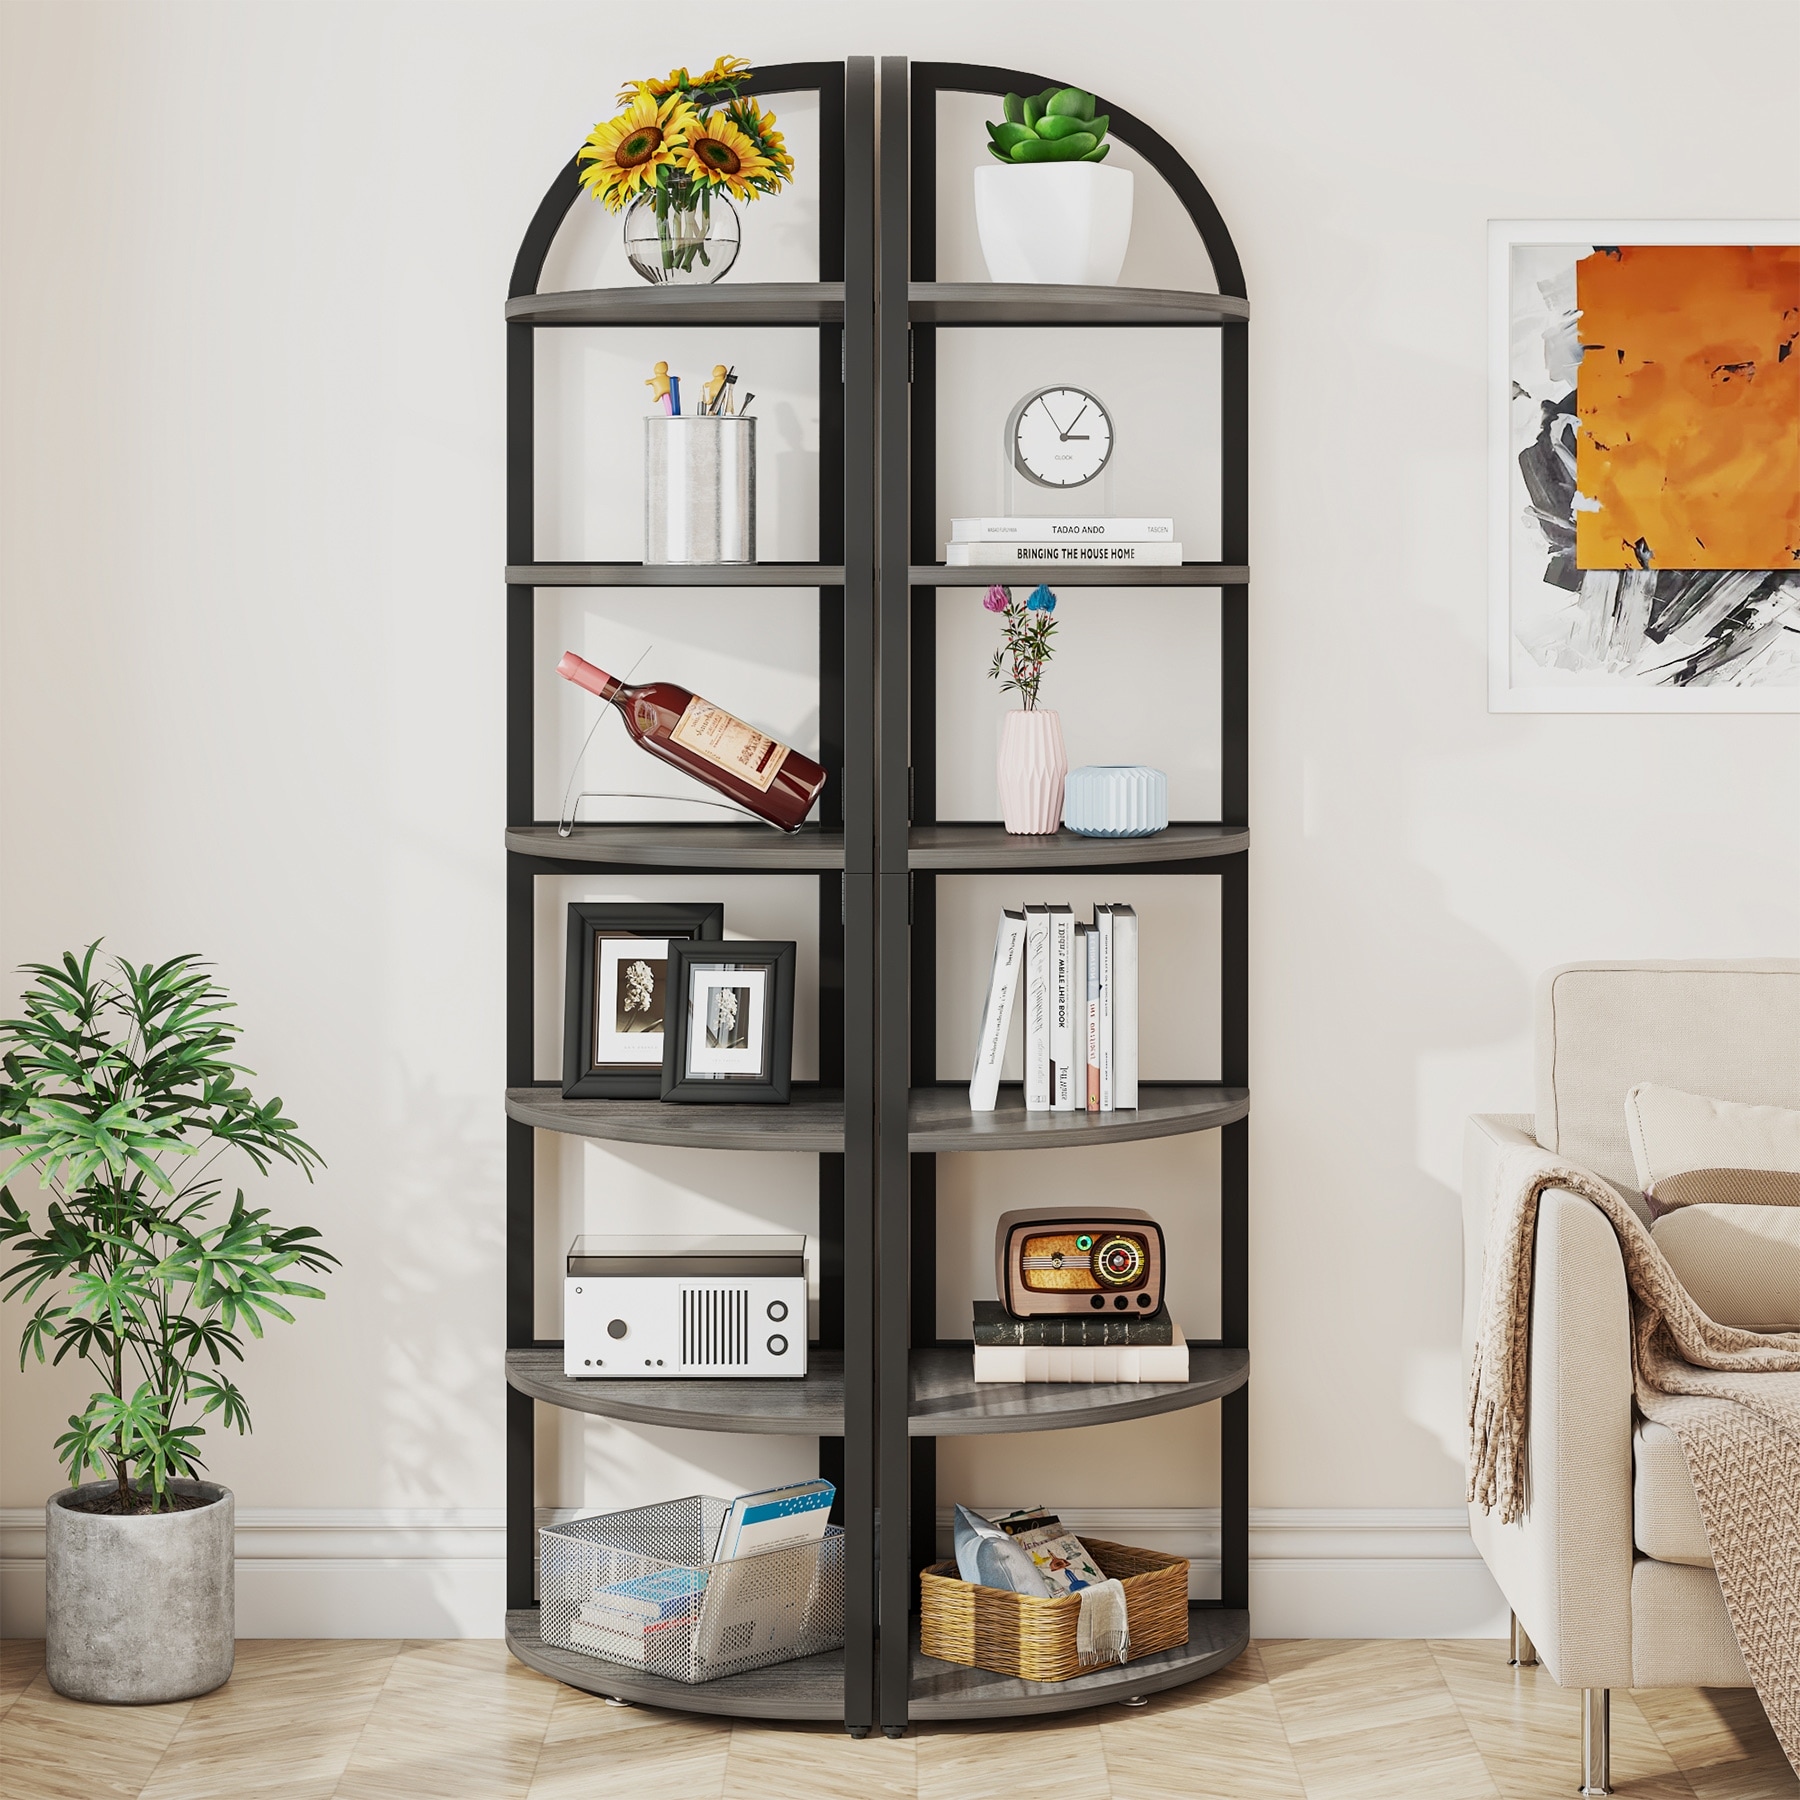 https://ak1.ostkcdn.com/images/products/is/images/direct/651ac6b21e425680b2b6325a70db2db8908beccc/6-Tier-7-Tier-Corner-Shelf%2C-Tall-Corner-Bookshelf%2C-Freestanding-Display-Book-Shelf.jpg